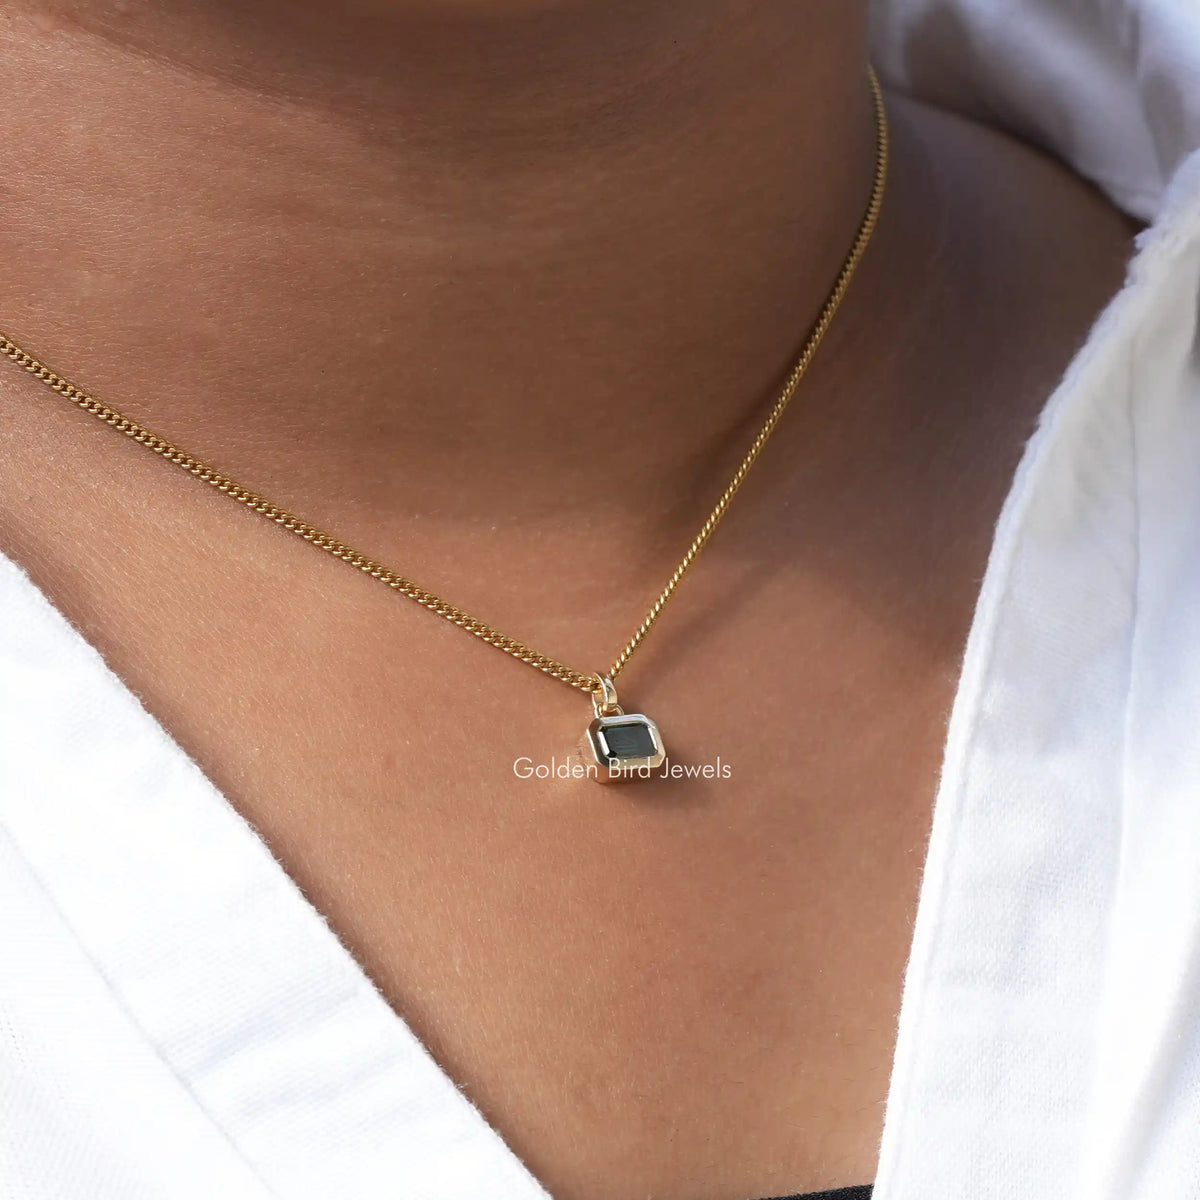 [In neck front view of green emerald cut moissanite pendant]-[Golden bird Jewels]